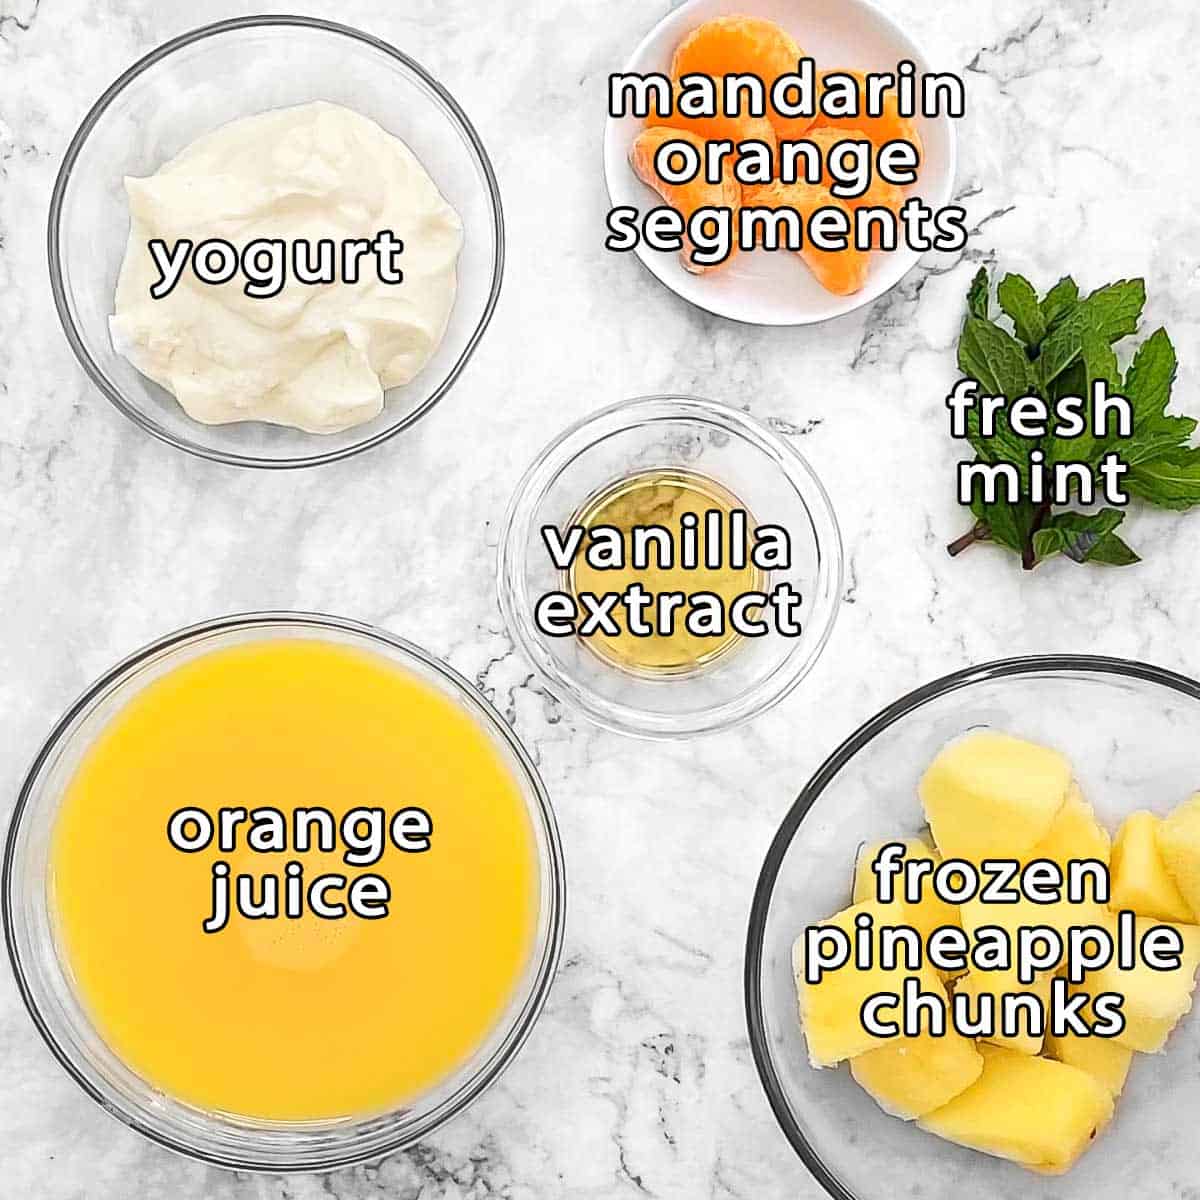 Overhead shot of ingredients - mandarin orange segments, yogurt, vanilla extract, fresh mint, orange juice, and frozen pineapple chunks.